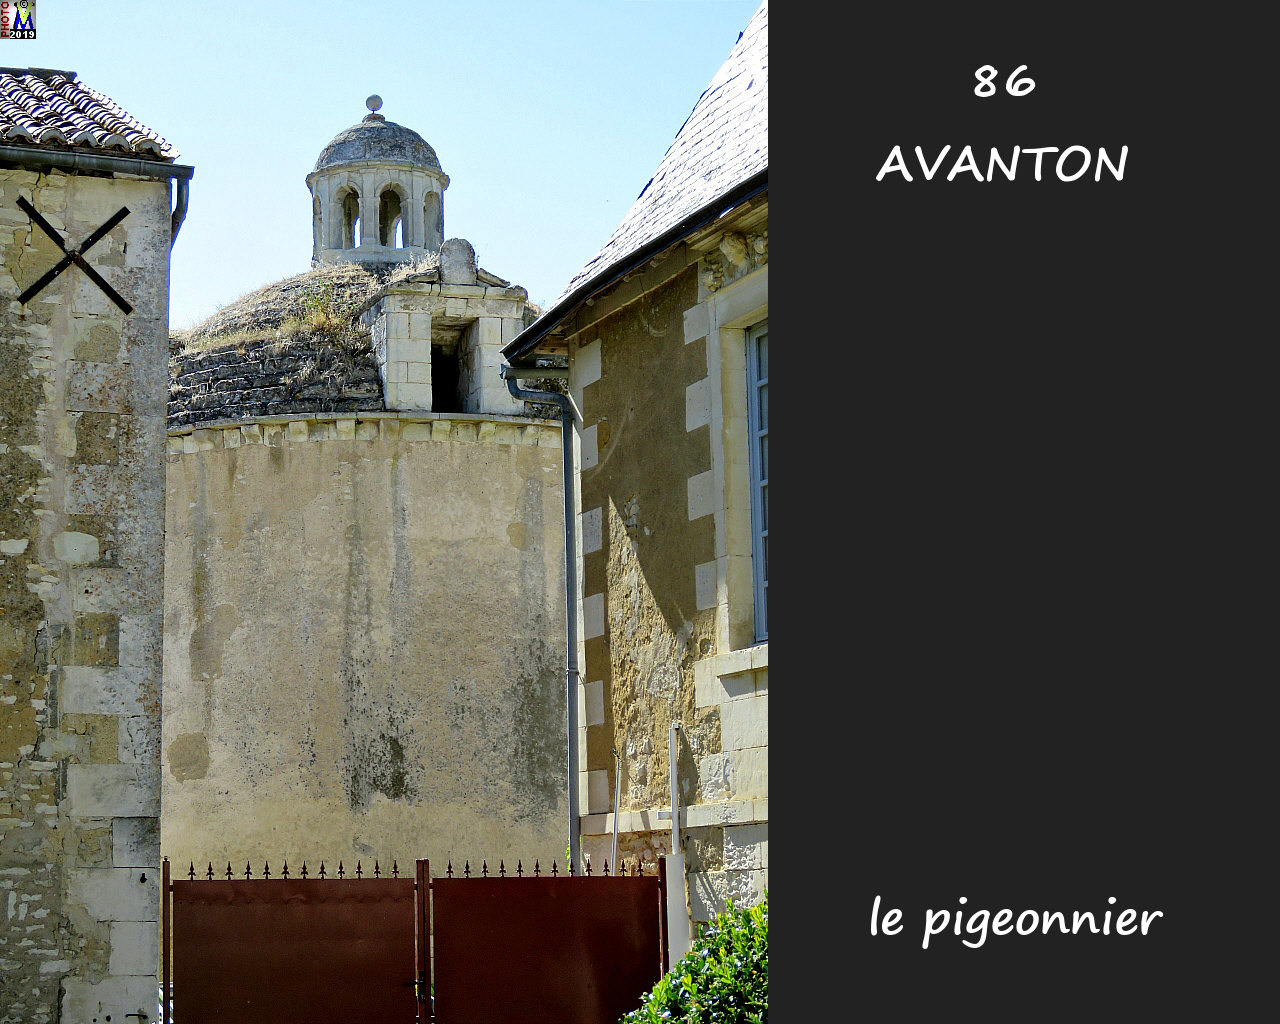 86AVANTON_chateau_302.jpg